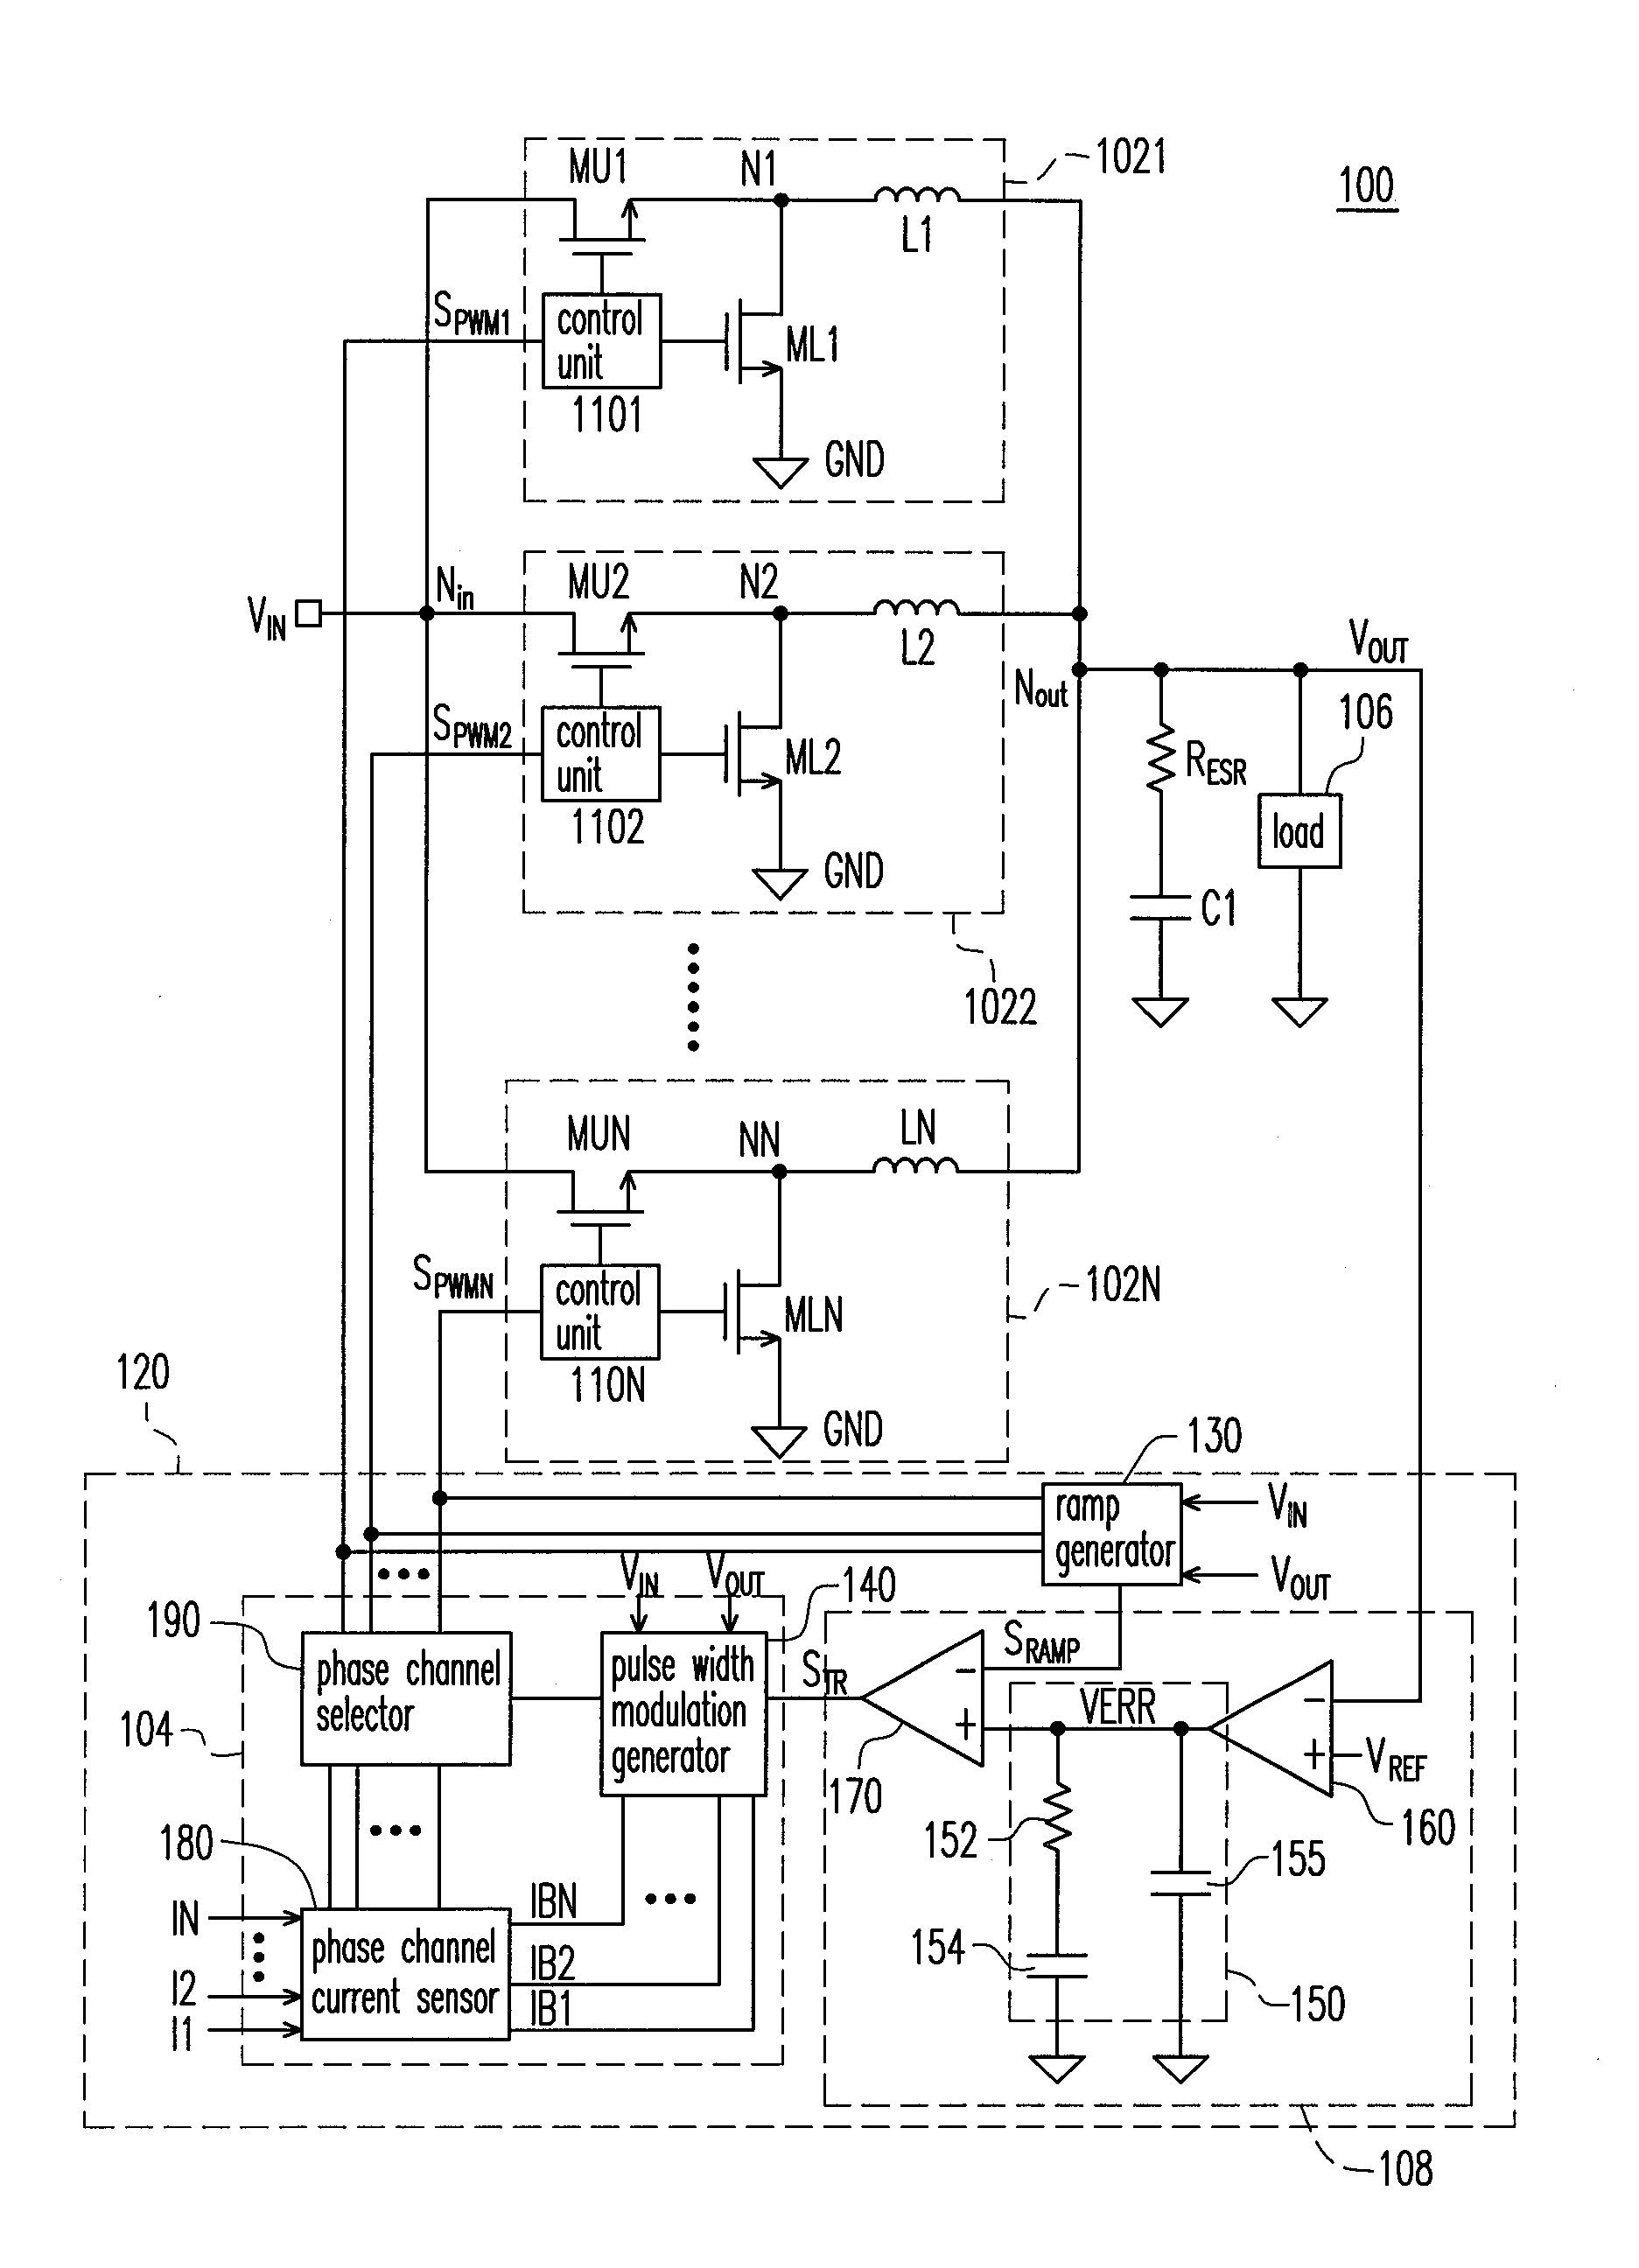 Multi-phase dc-dc power converter